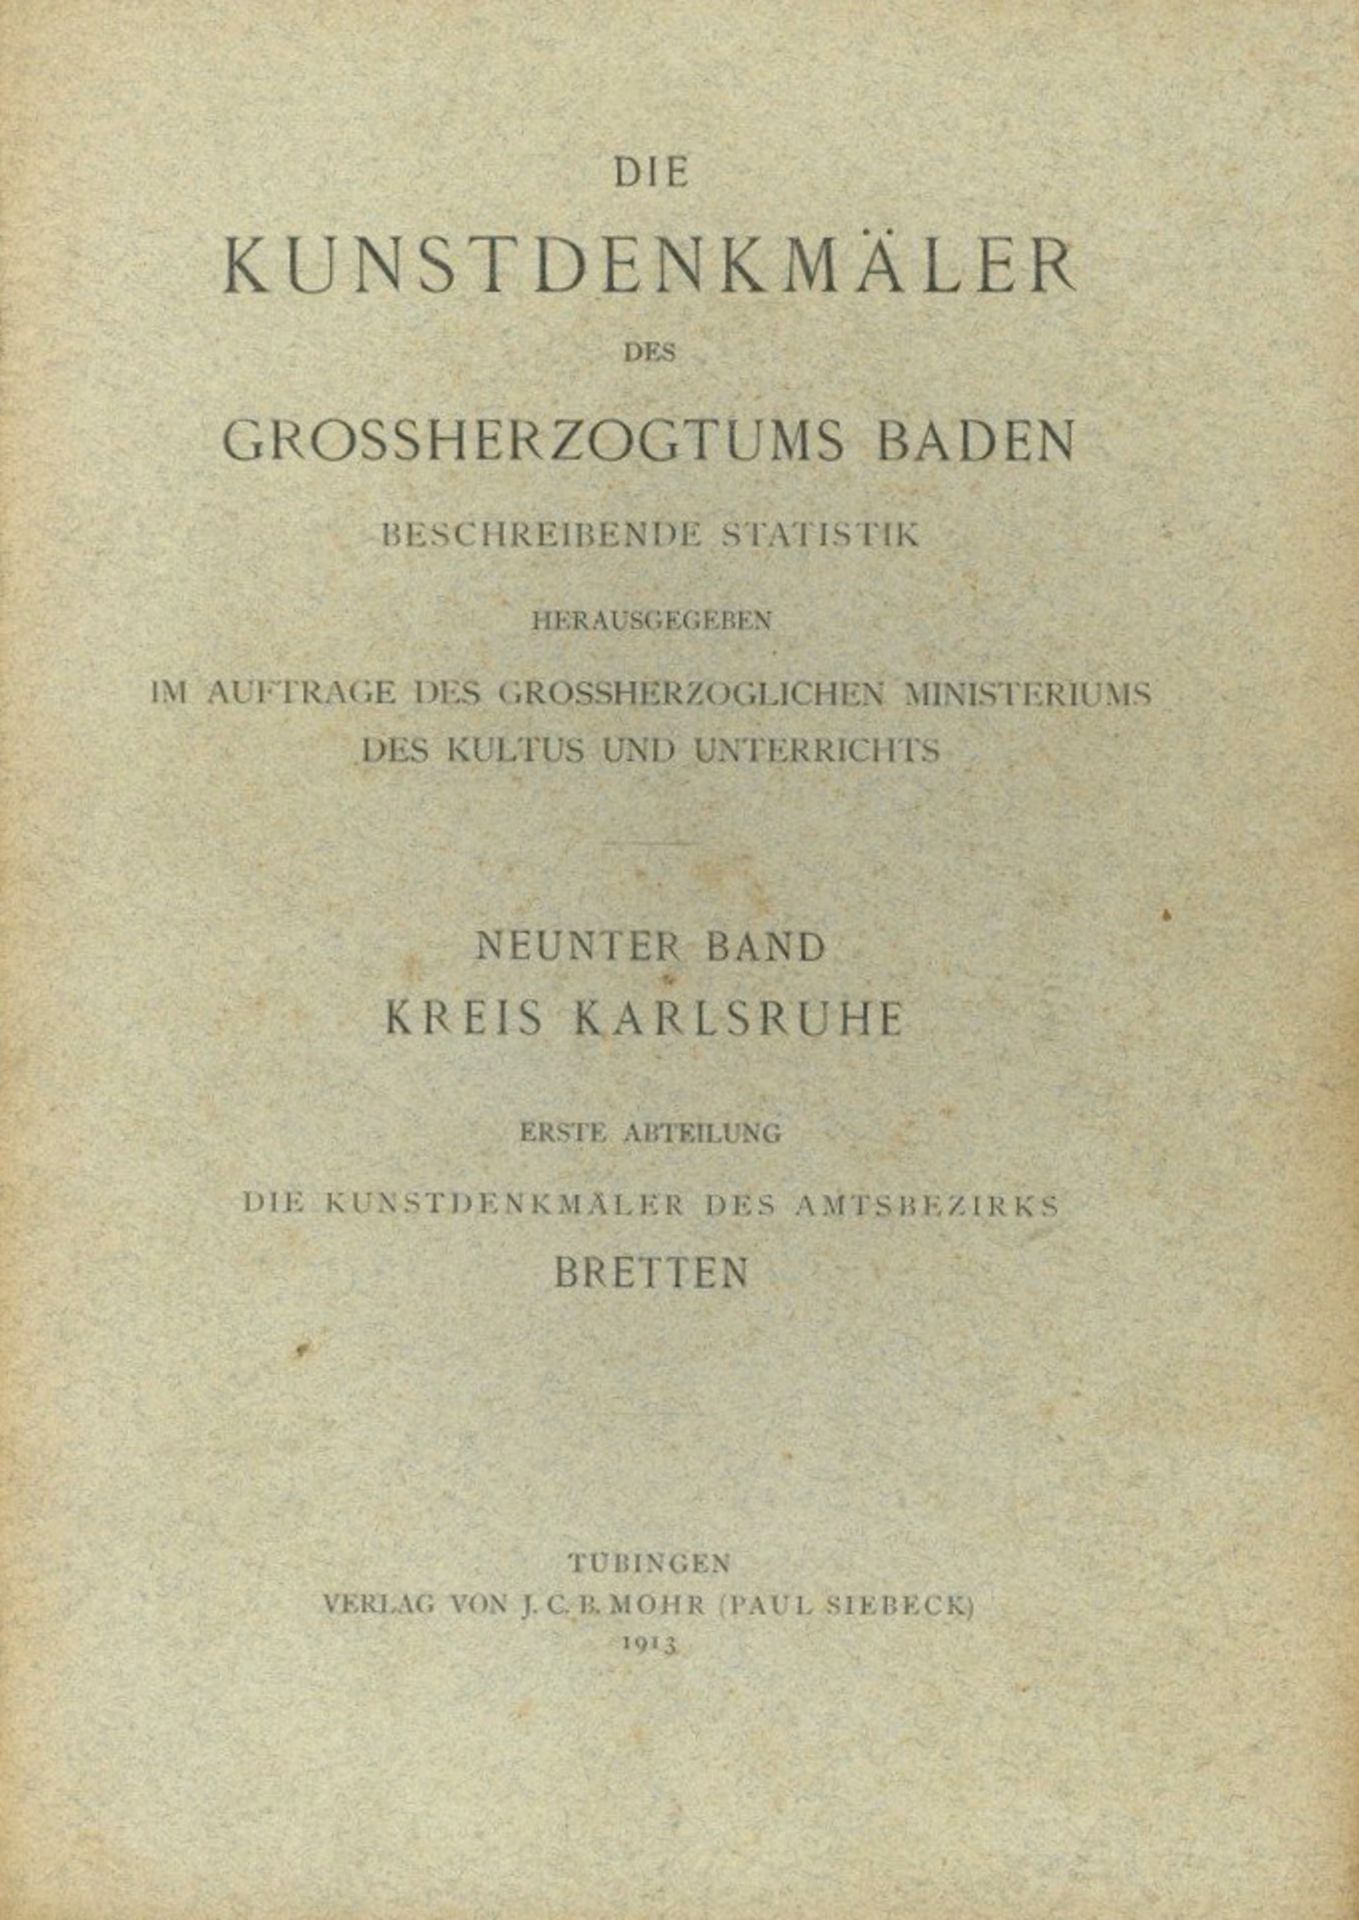 Adel Baden Buch Die Kunstdenkmäler des Grossherzogtums Baden, IX. Band Kreis Karlsruhe Amtsbezirk